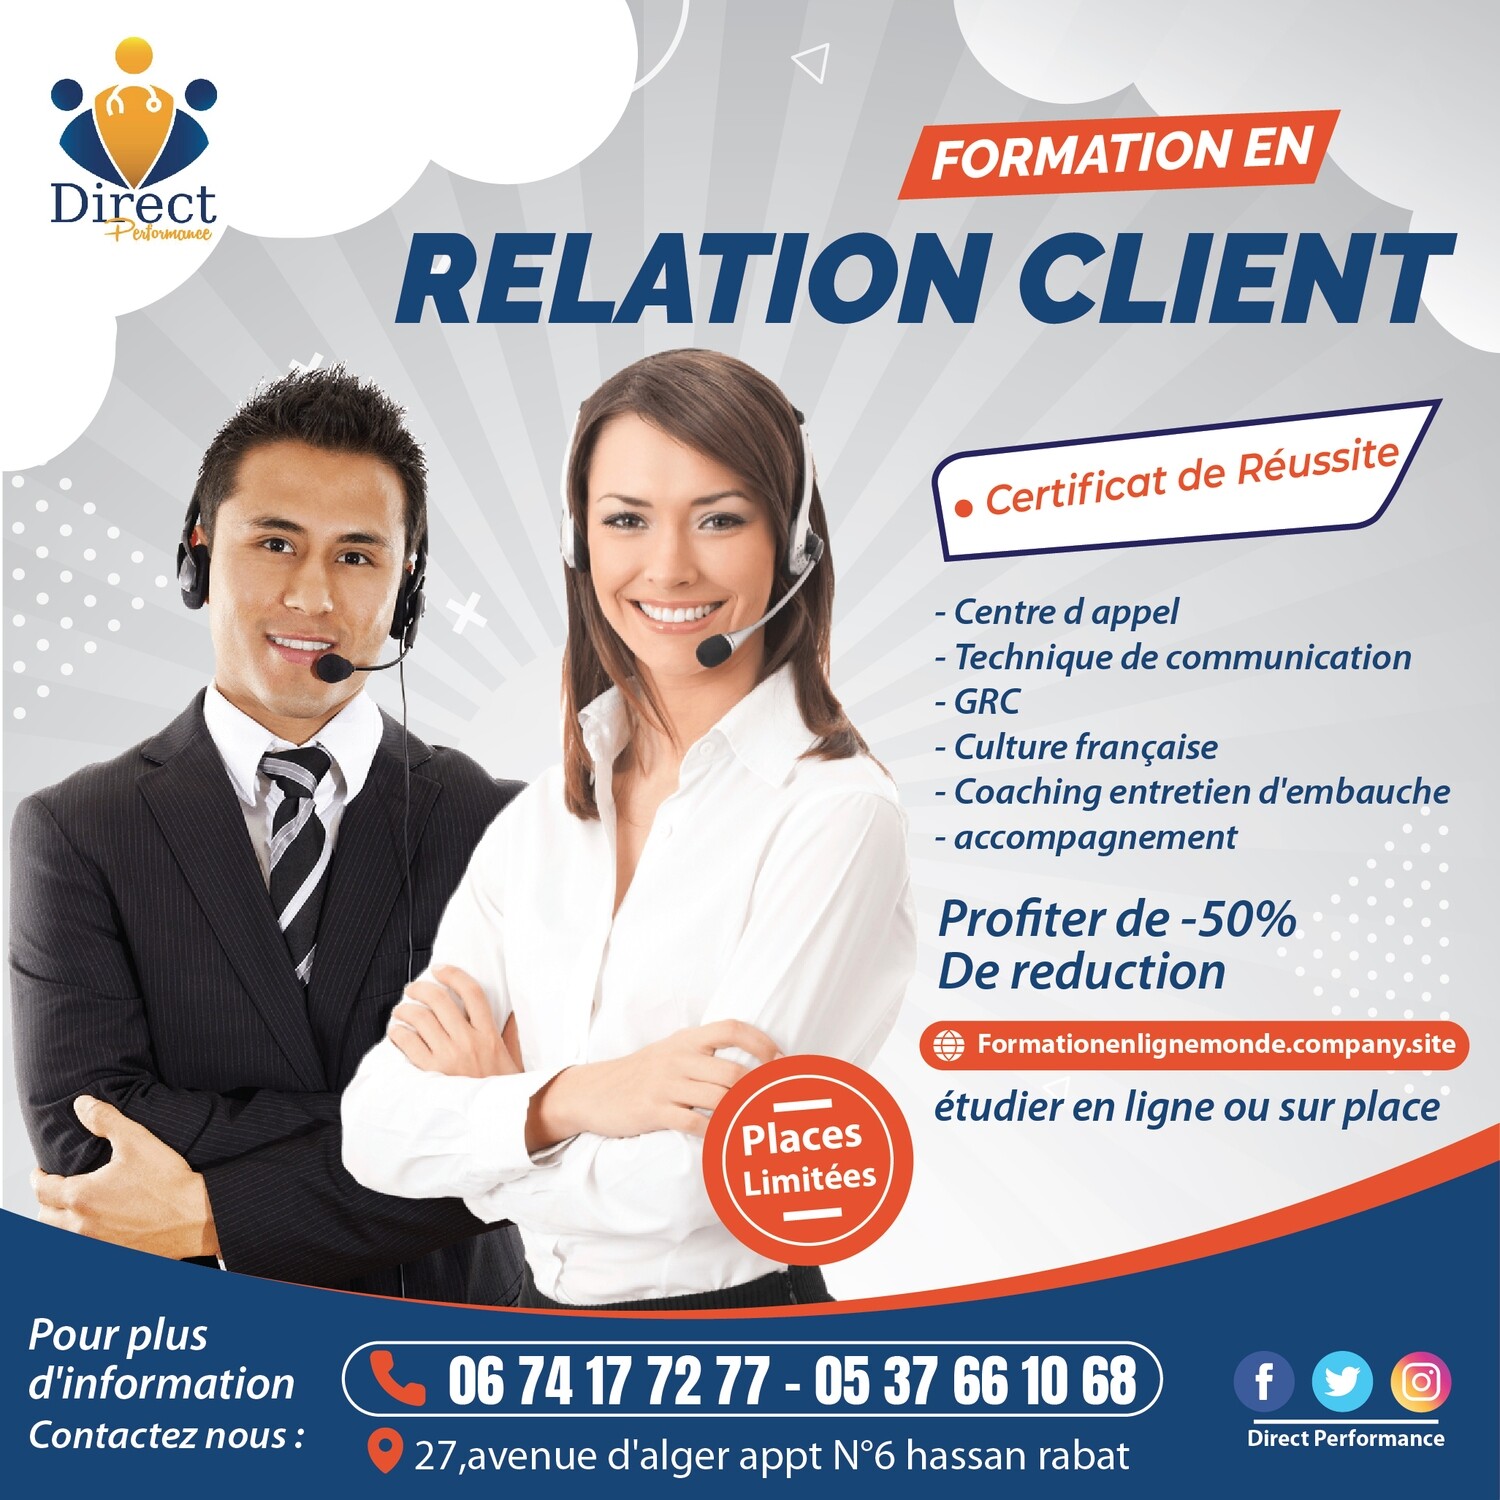 Formation en relation client